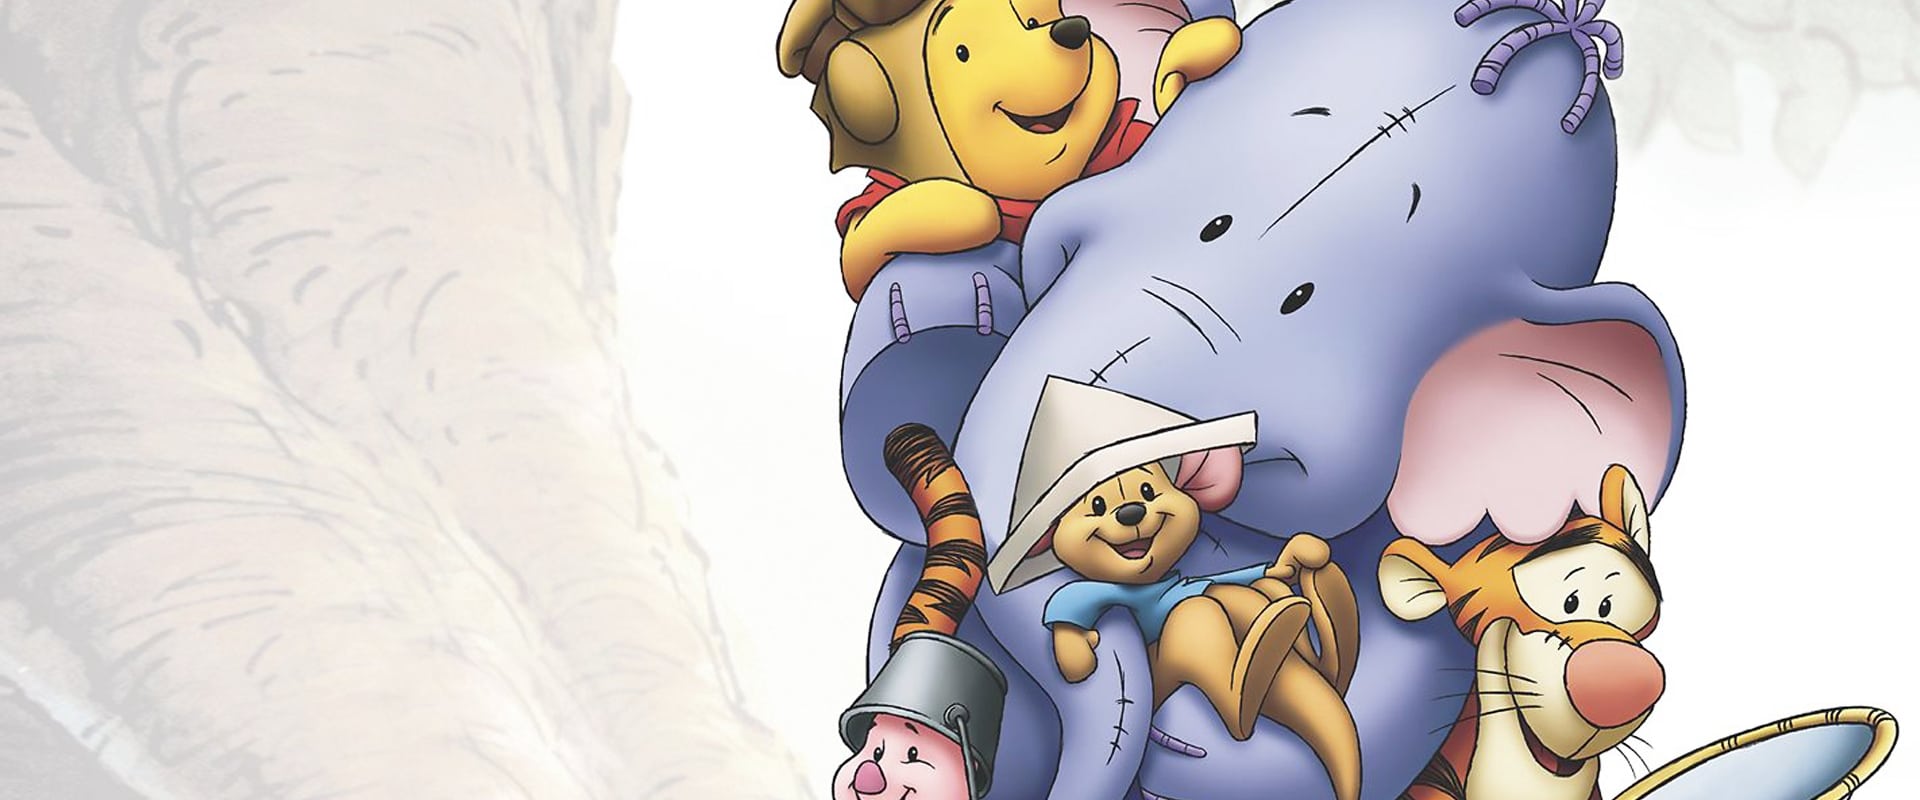 Winnie the Pooh e gli Efelanti